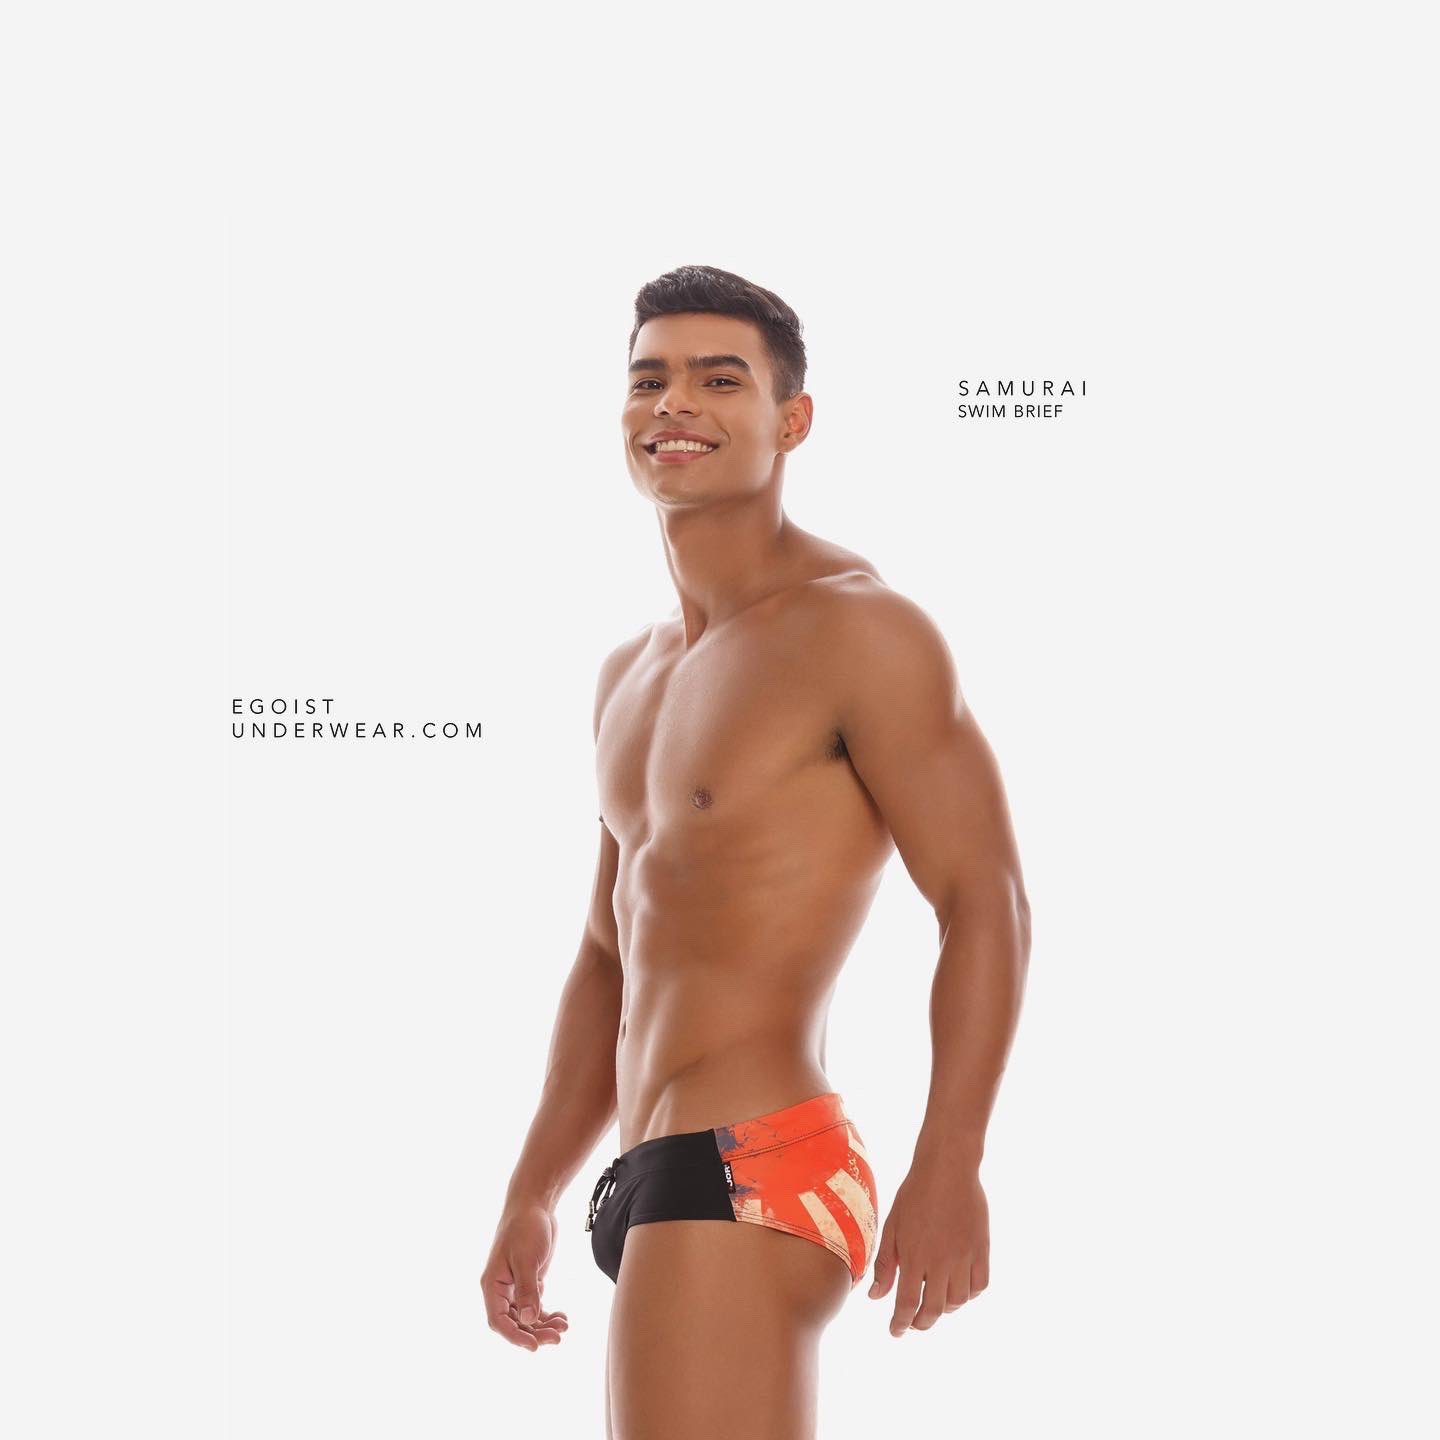 Egoist Underwear on X:  Samurai swim brief by Jor  #poolvibes #pridemonth #jorwear #mensswim #speedo #beachvibe #bikini  #beachwear #beachvibes #gaycruise #fireisland #gayswimwear #gayspeedo  #fireislandpines #mensswimwear